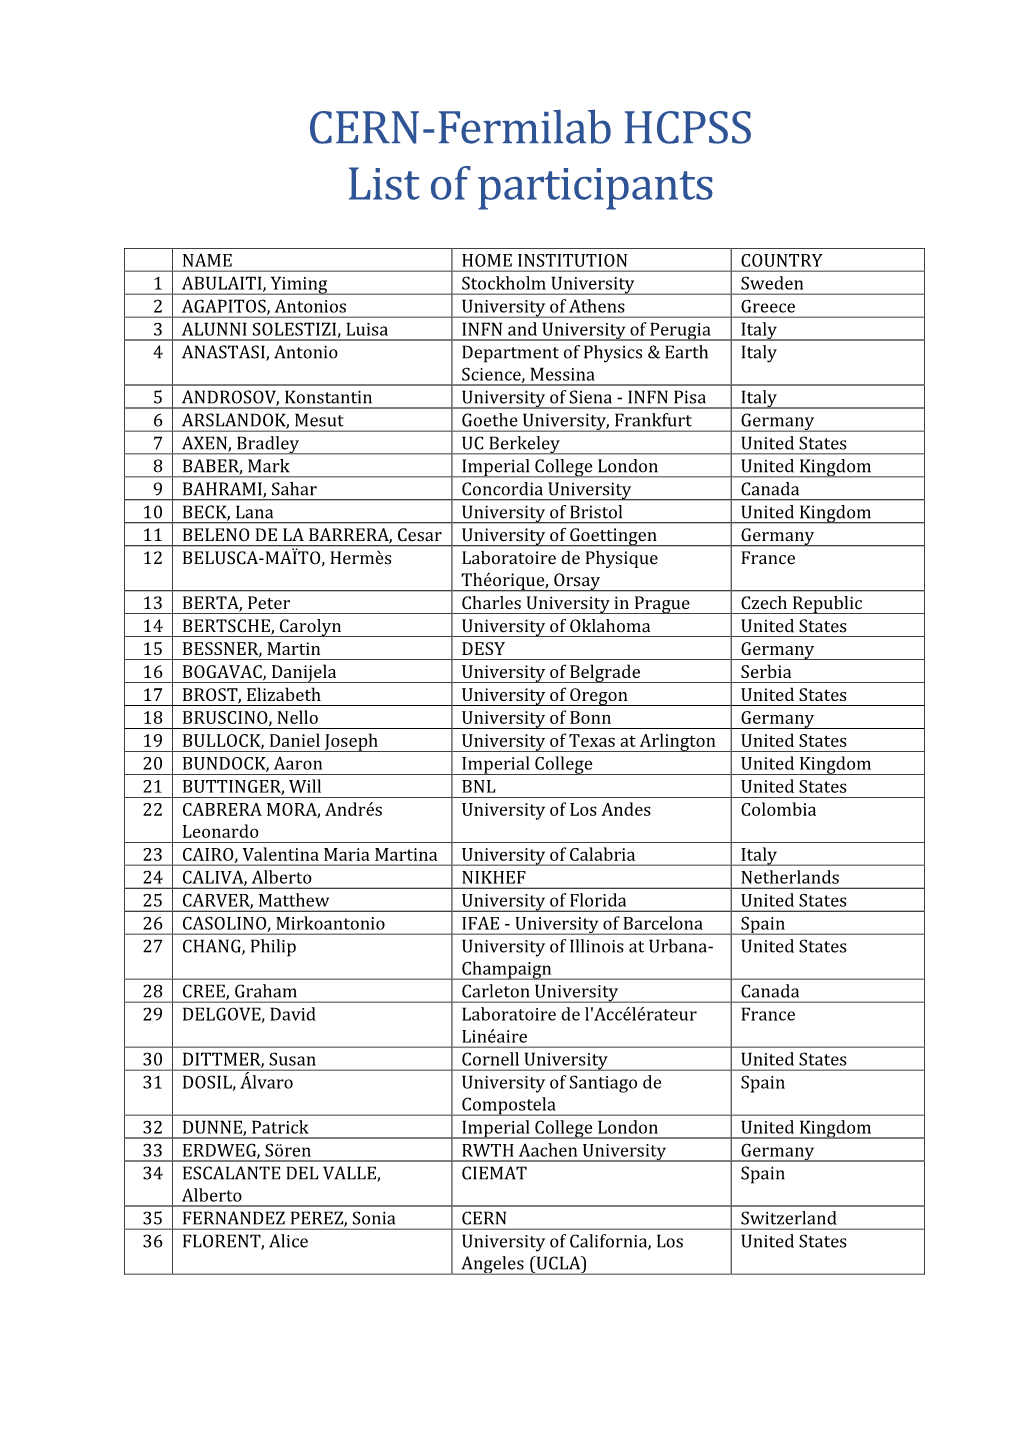 CERN-Fermilab HCPSS List of Participants